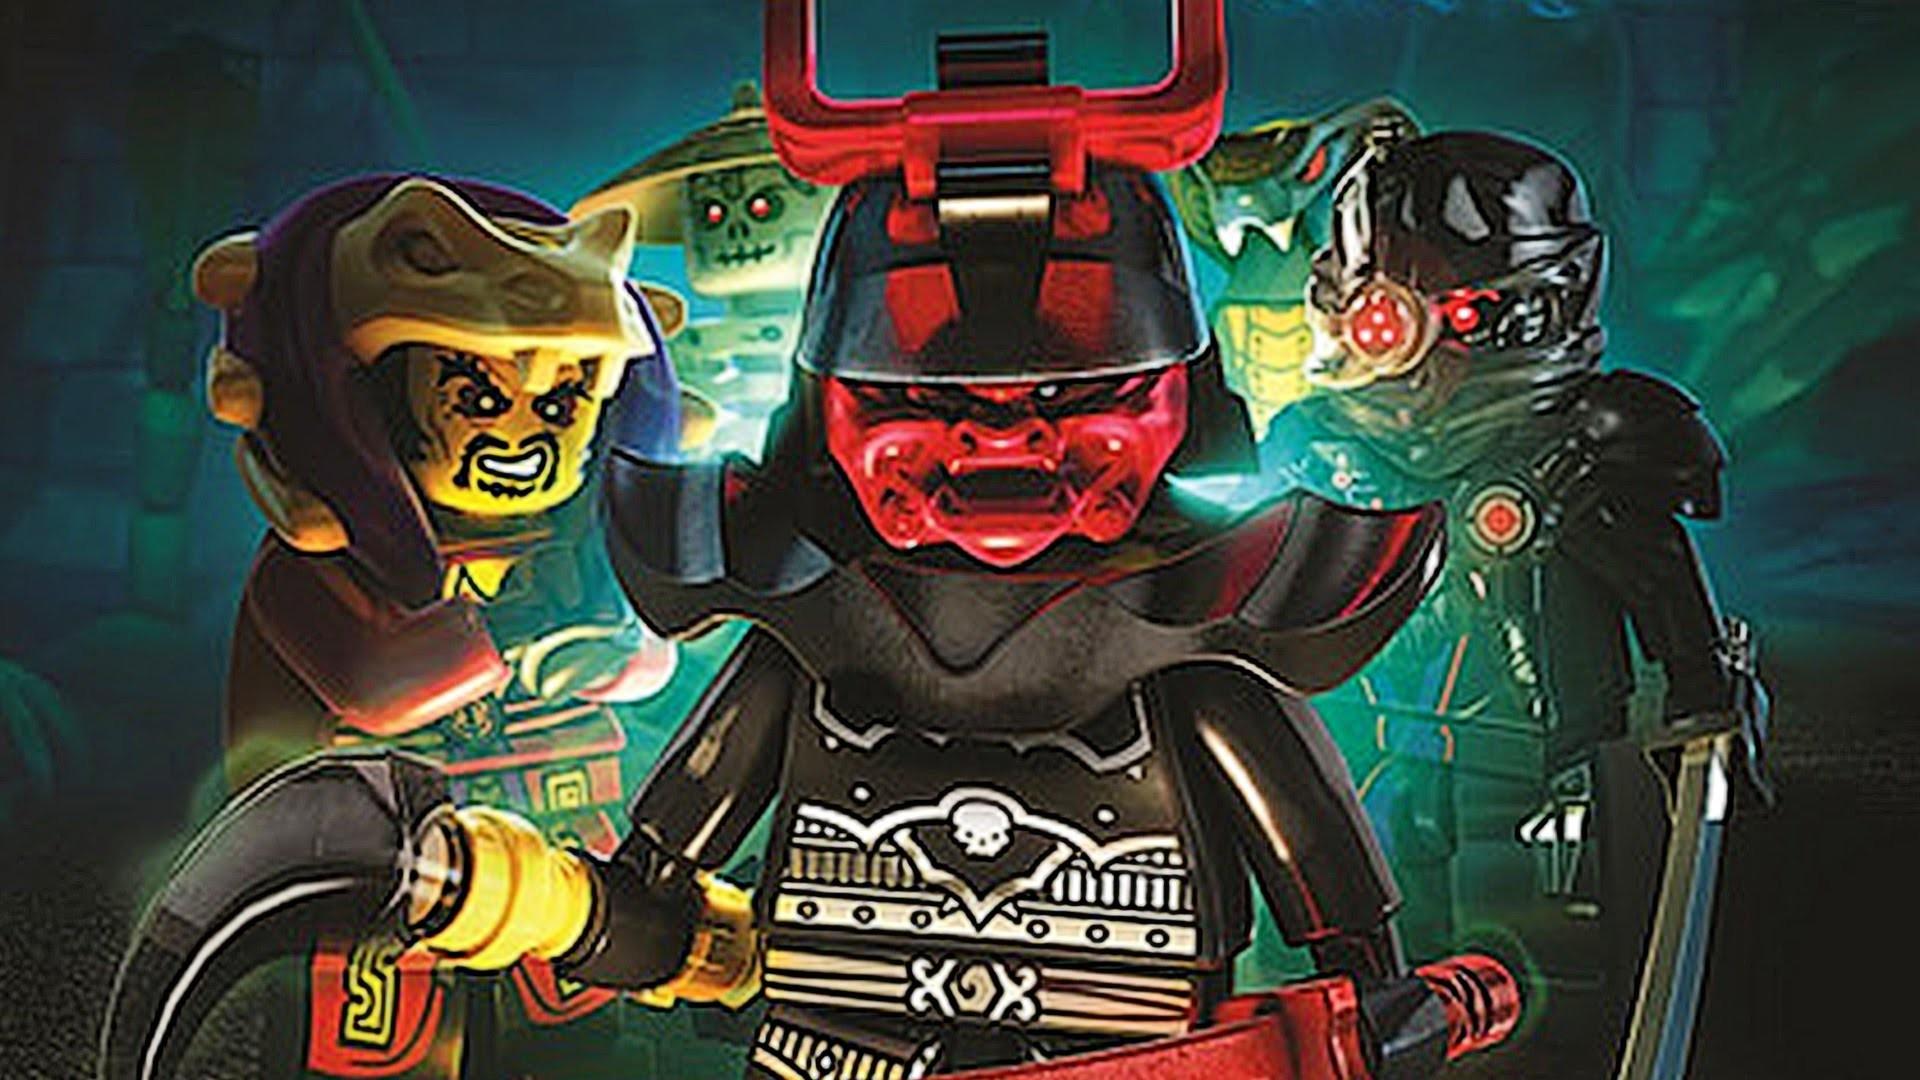 Lego Ninjago Wallpaper, image collections of wallpaper